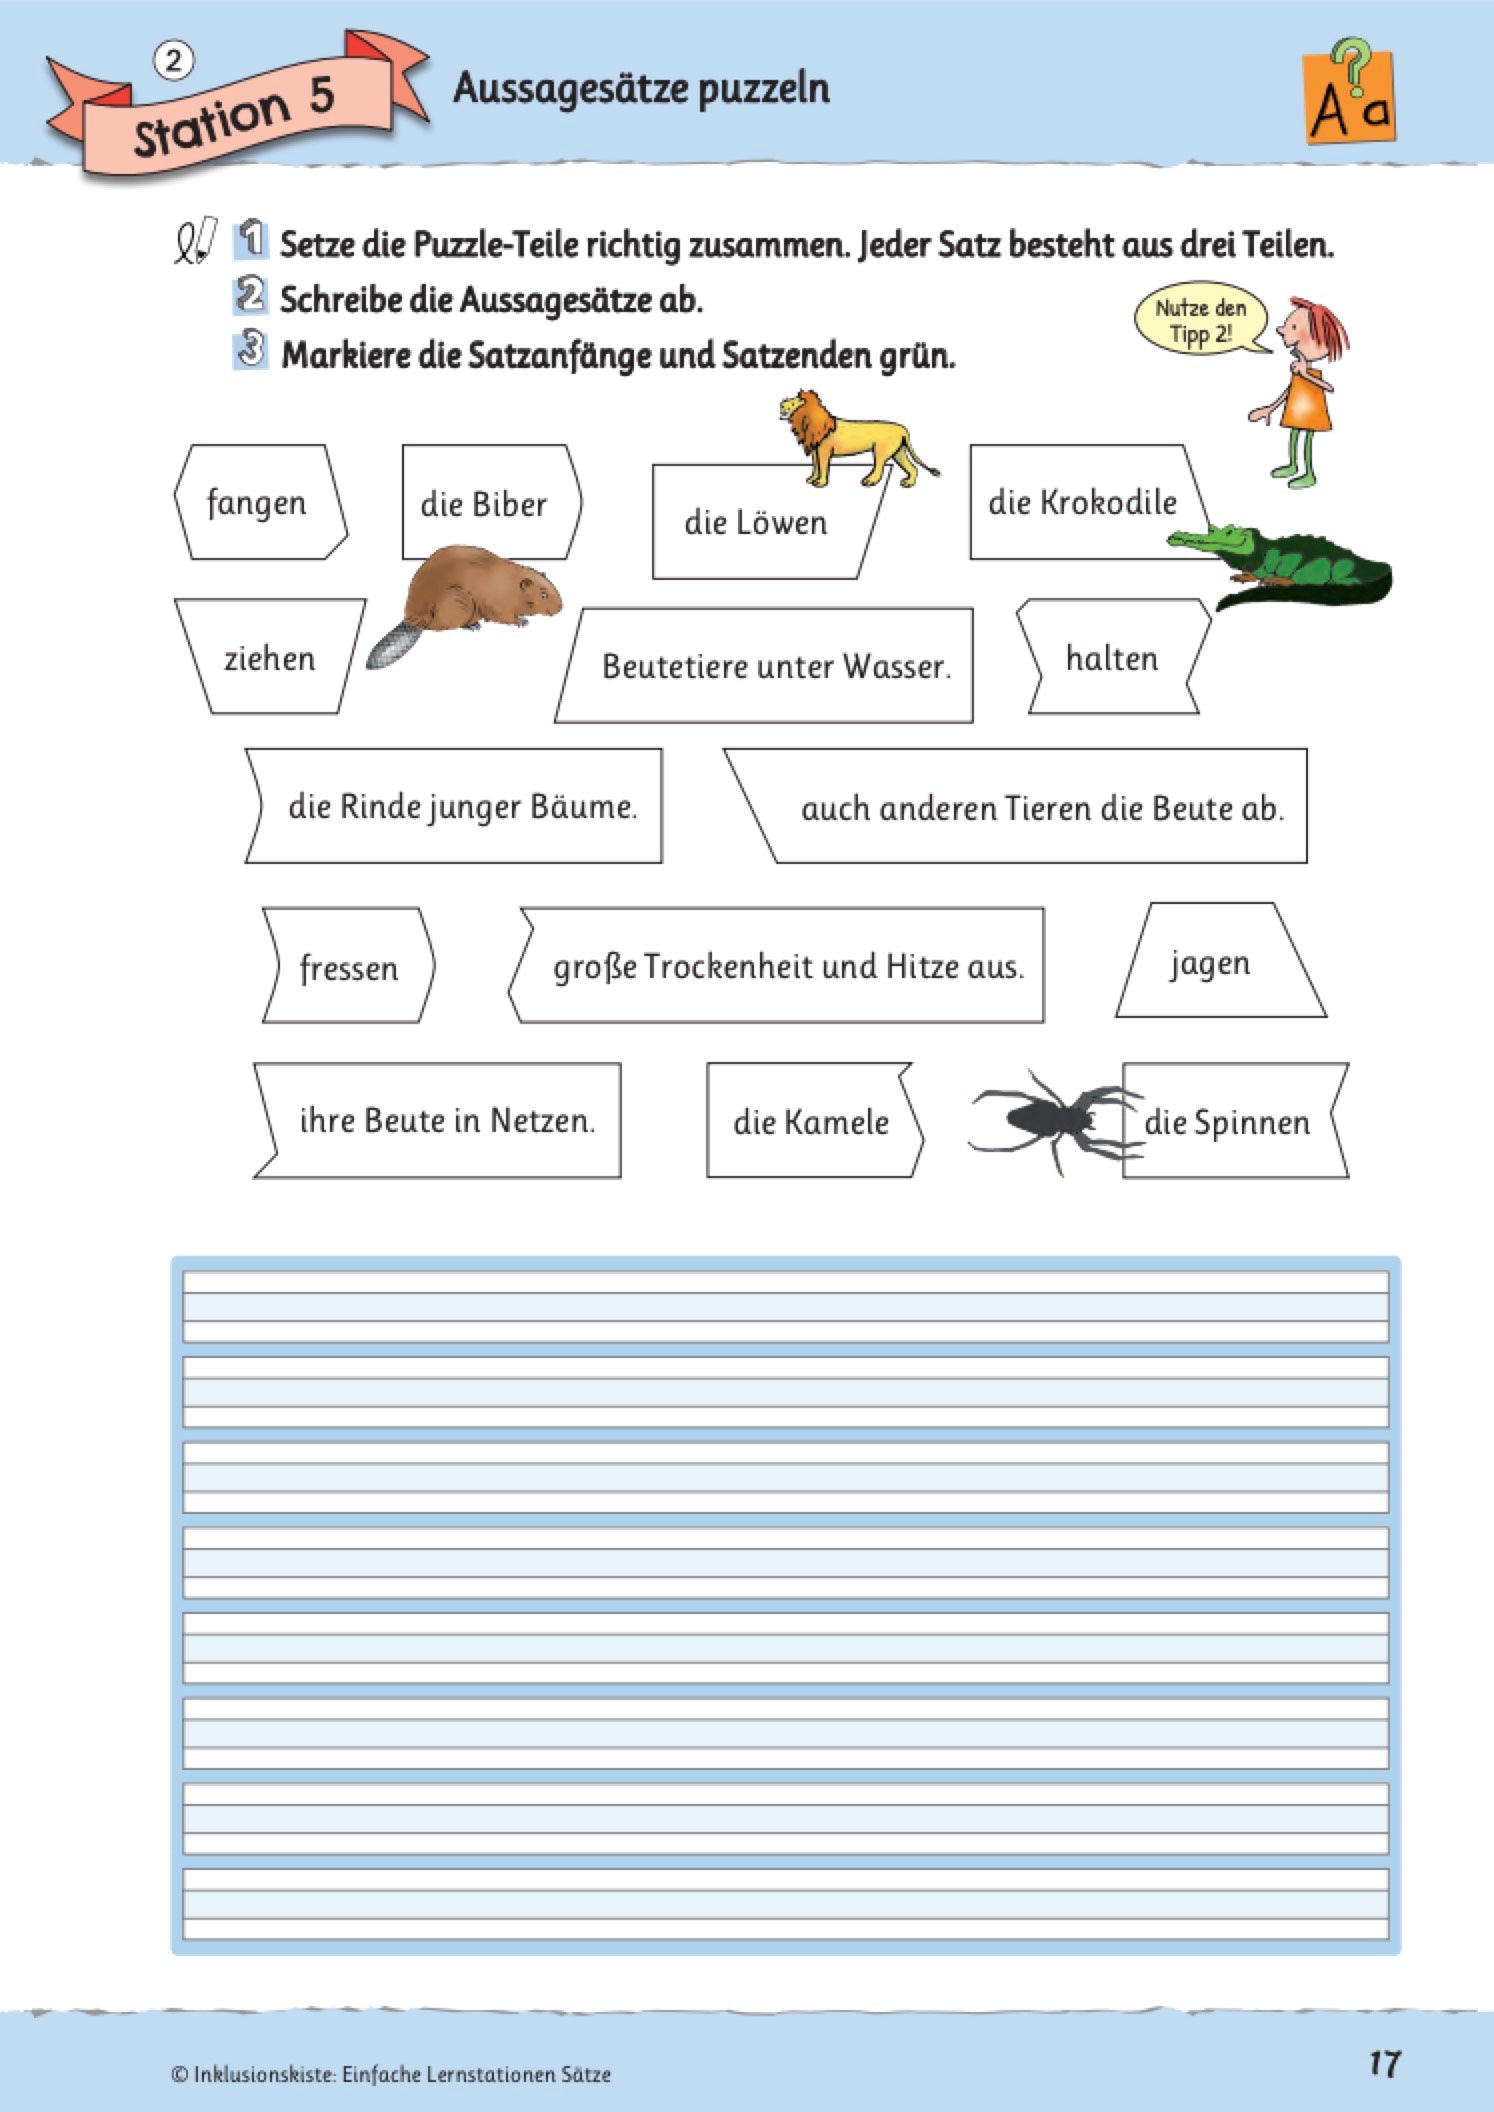 Einfache Lernstationen: Sätze / E-BOOK